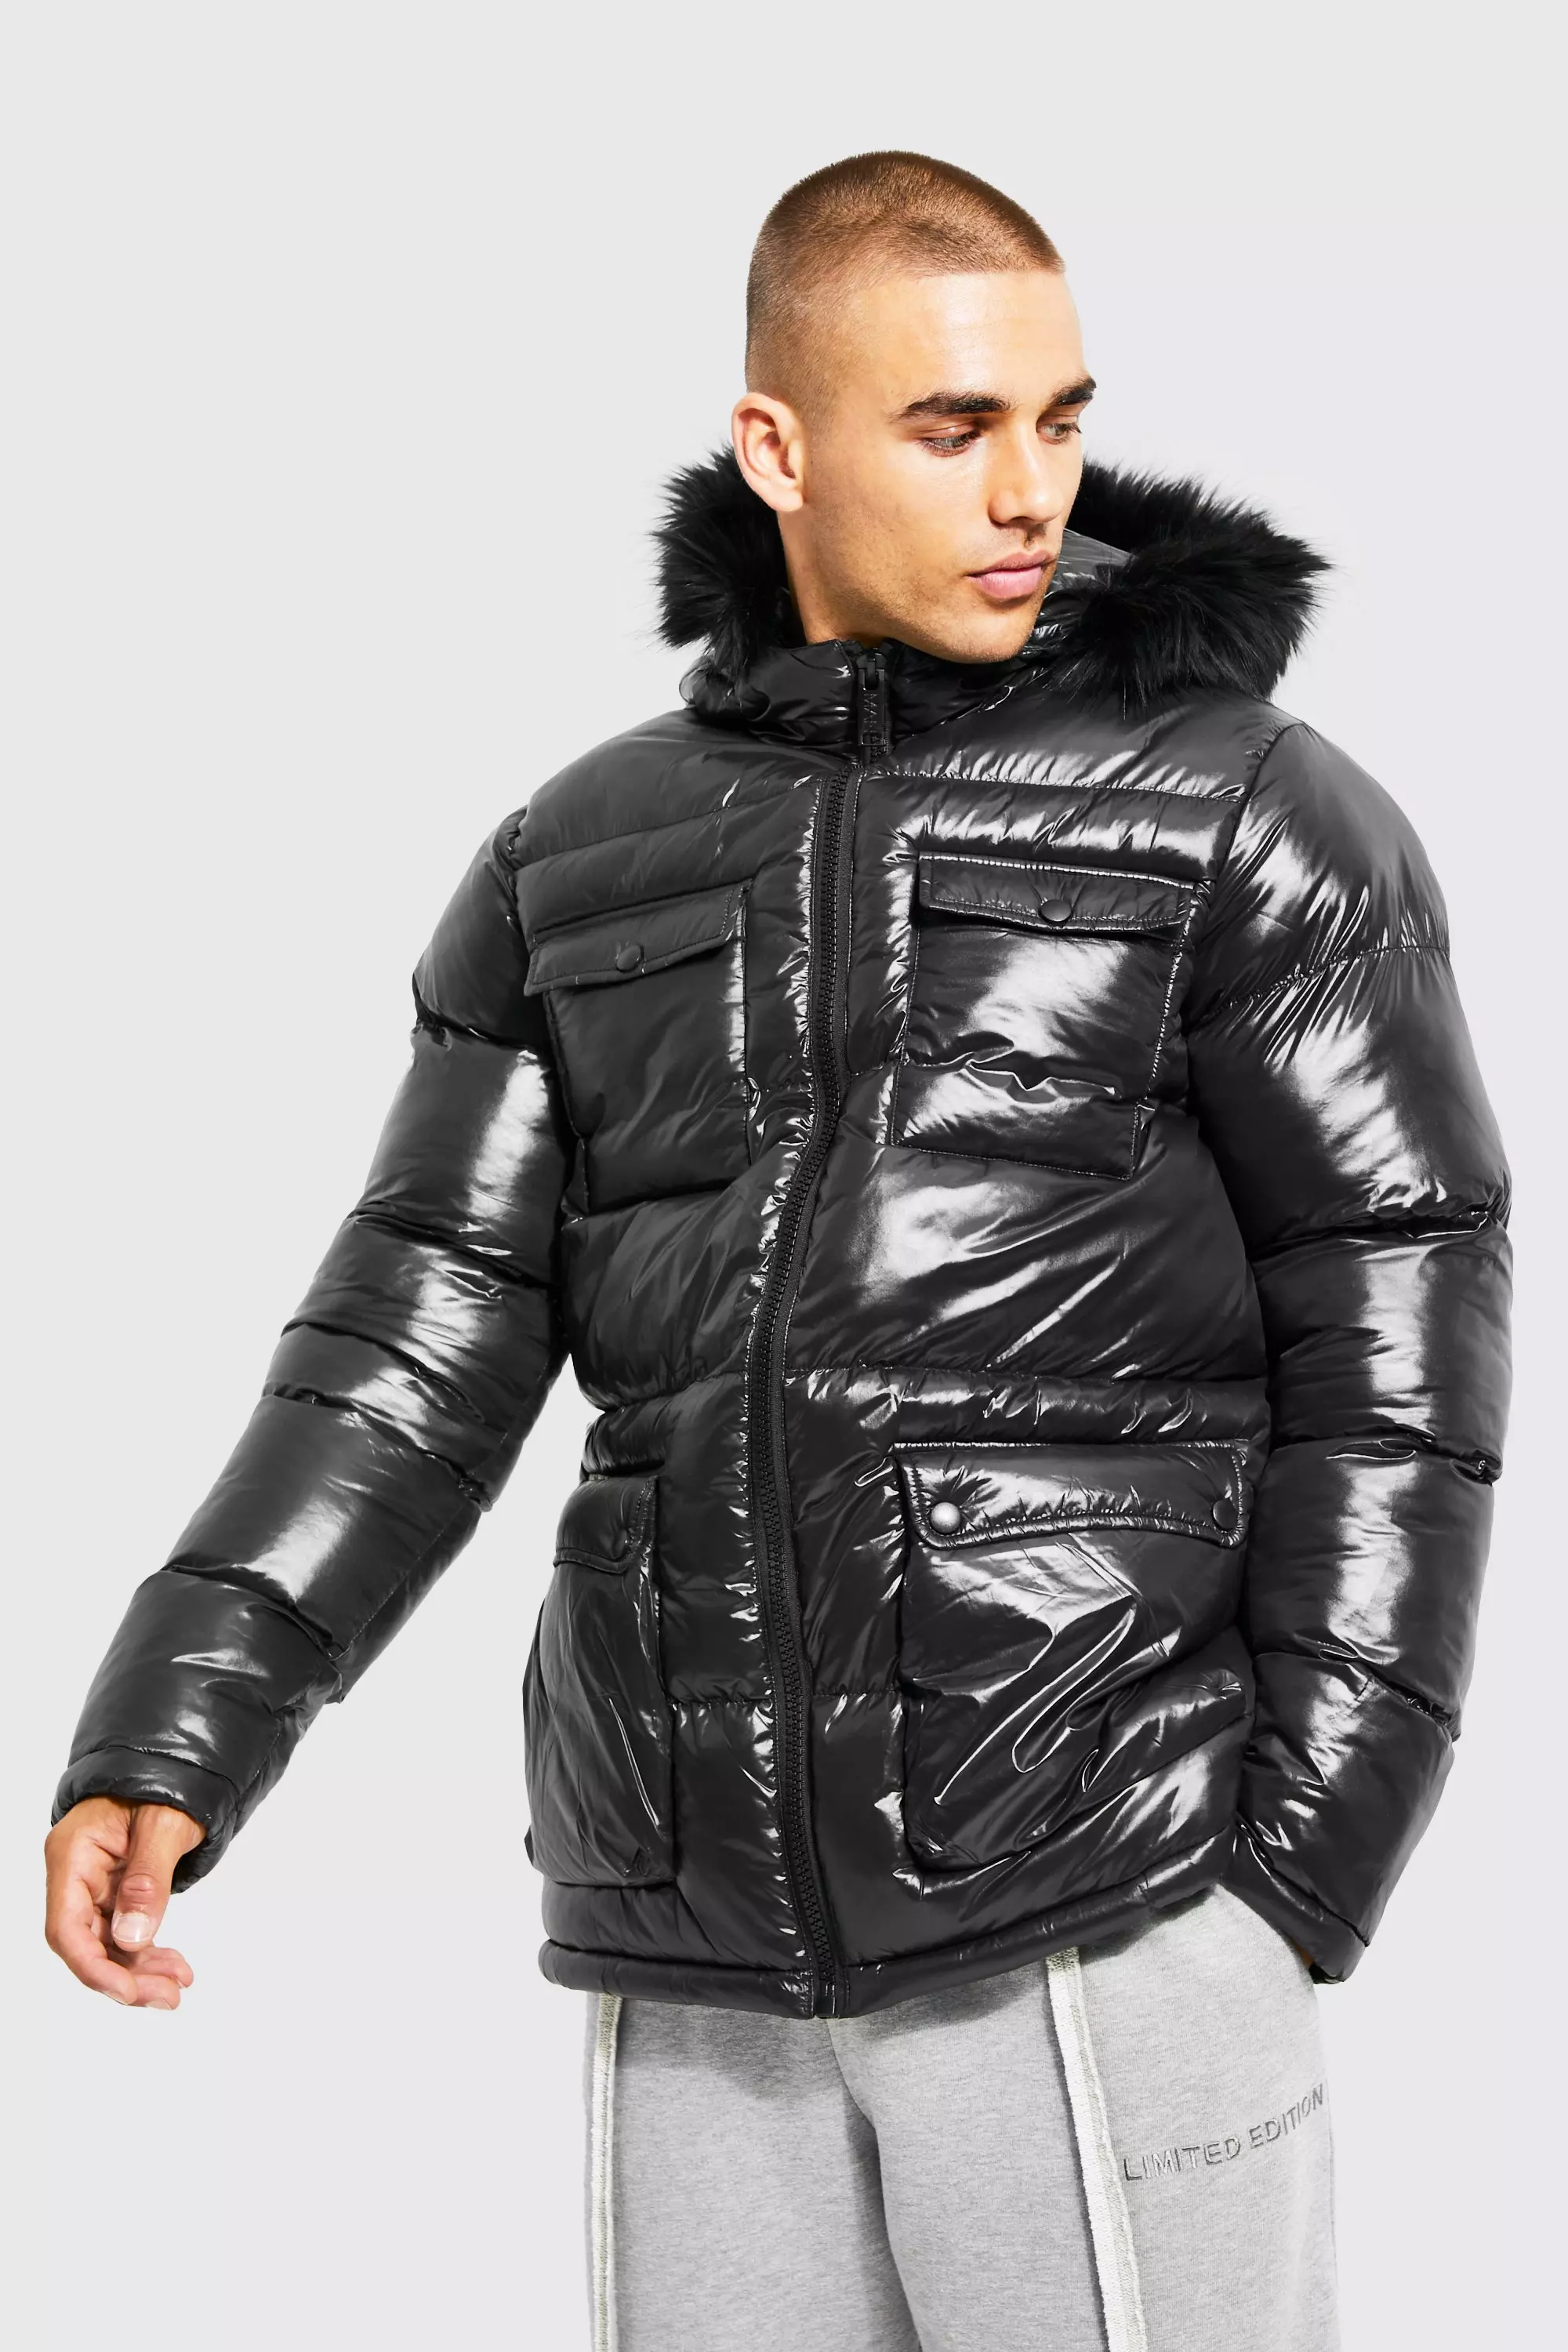 boohooMAN Mens High Shine Quilted Zip Through Jacket - Black M